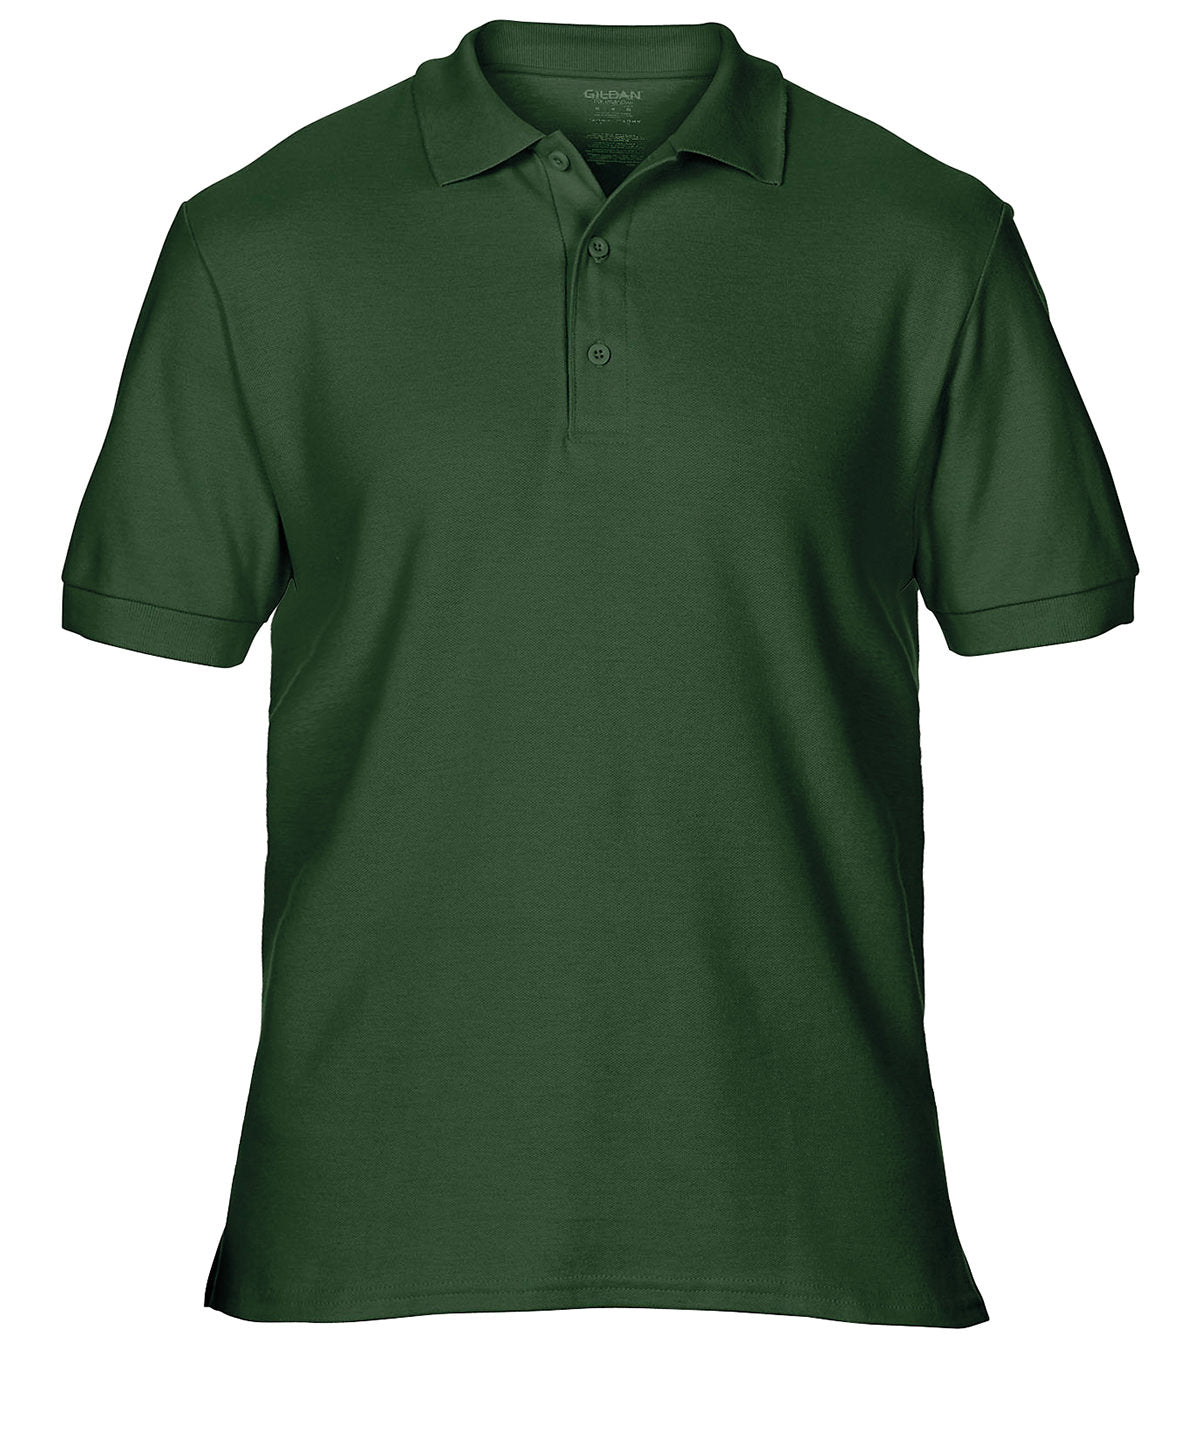 Personalised Polo Shirts - Black Gildan Hammer® piqué sport shirt